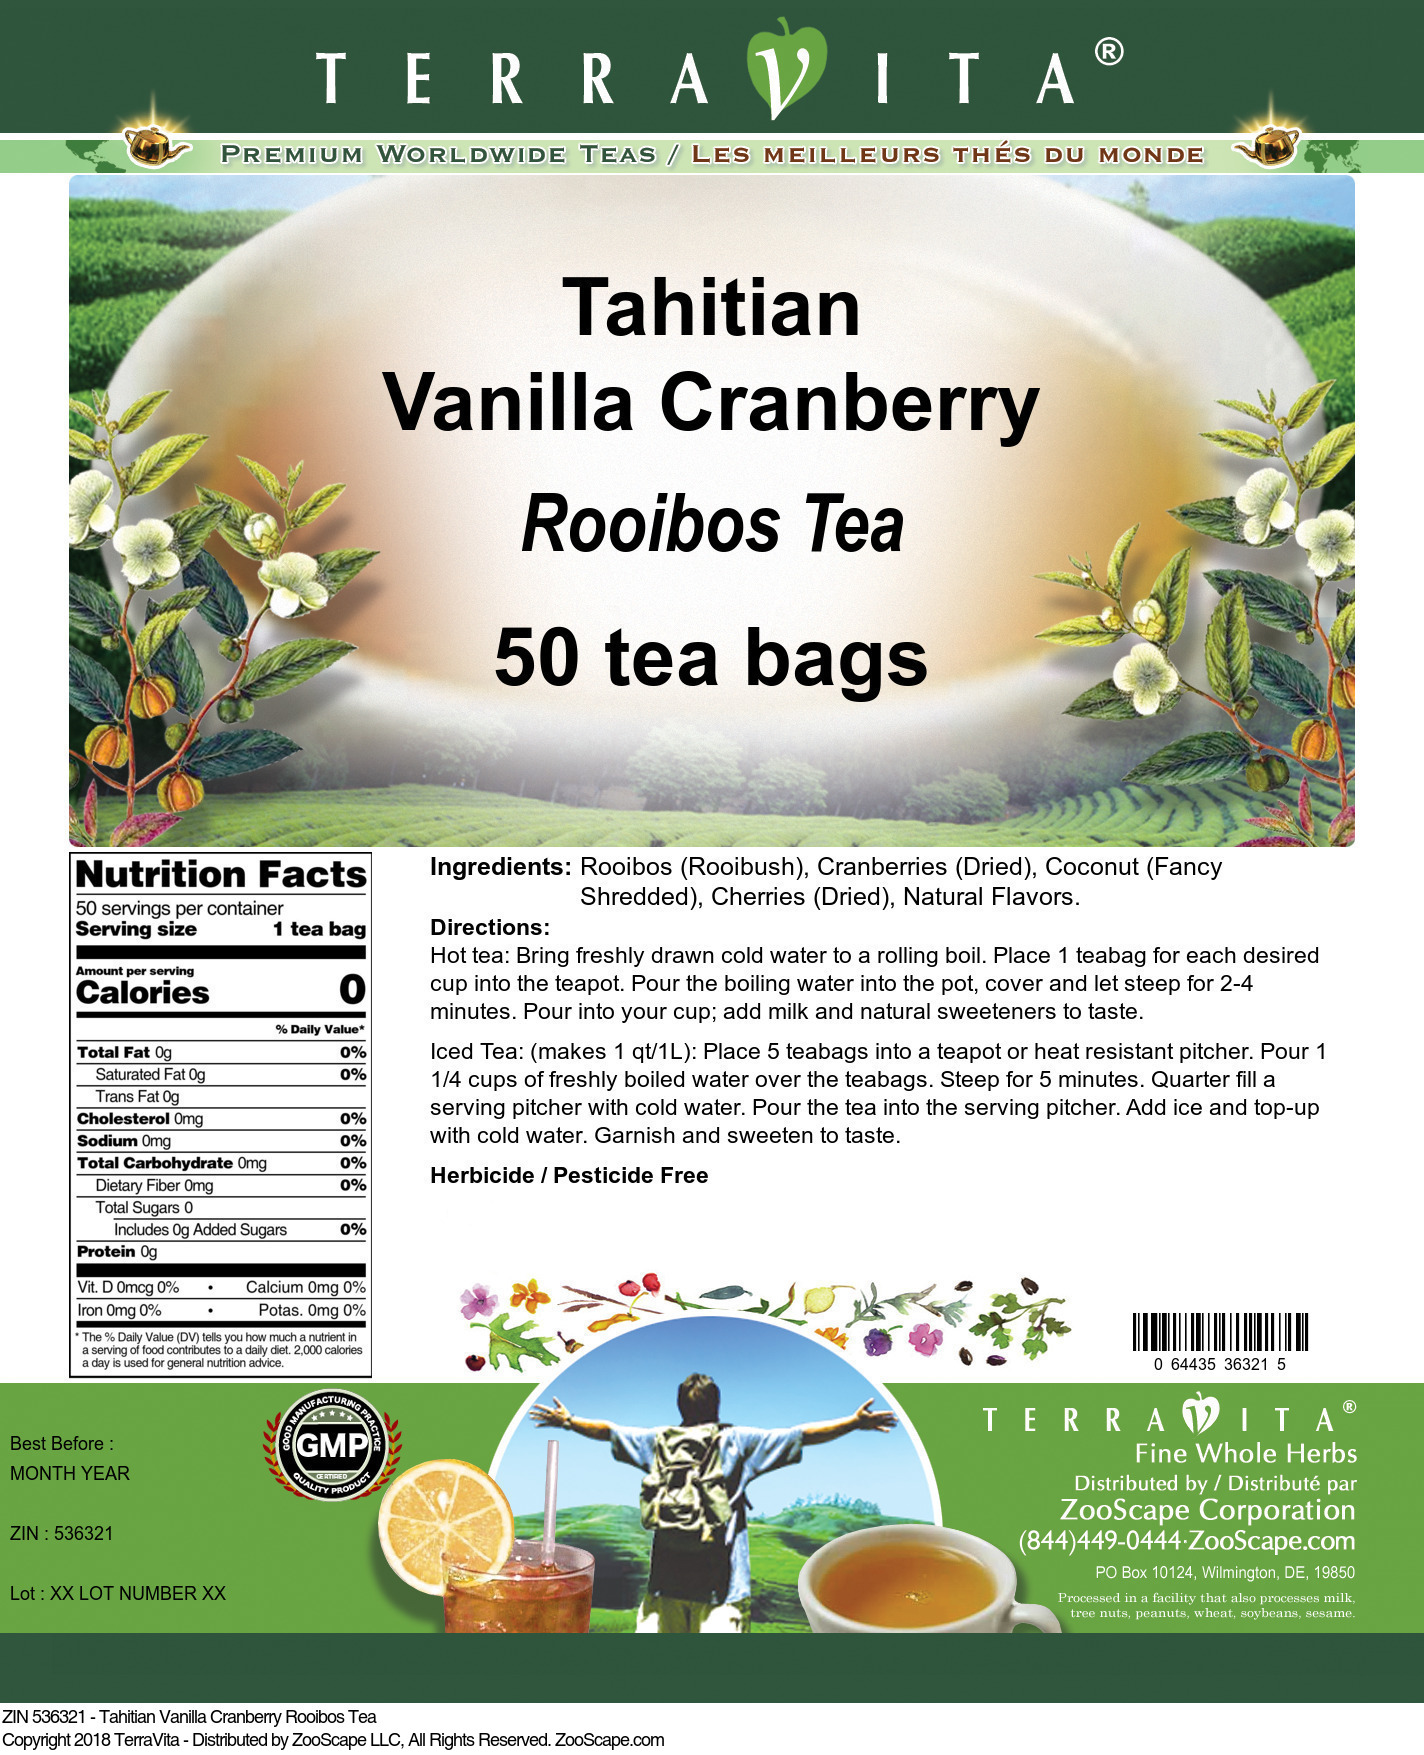 Tahitian Vanilla Cranberry Rooibos Tea - Label